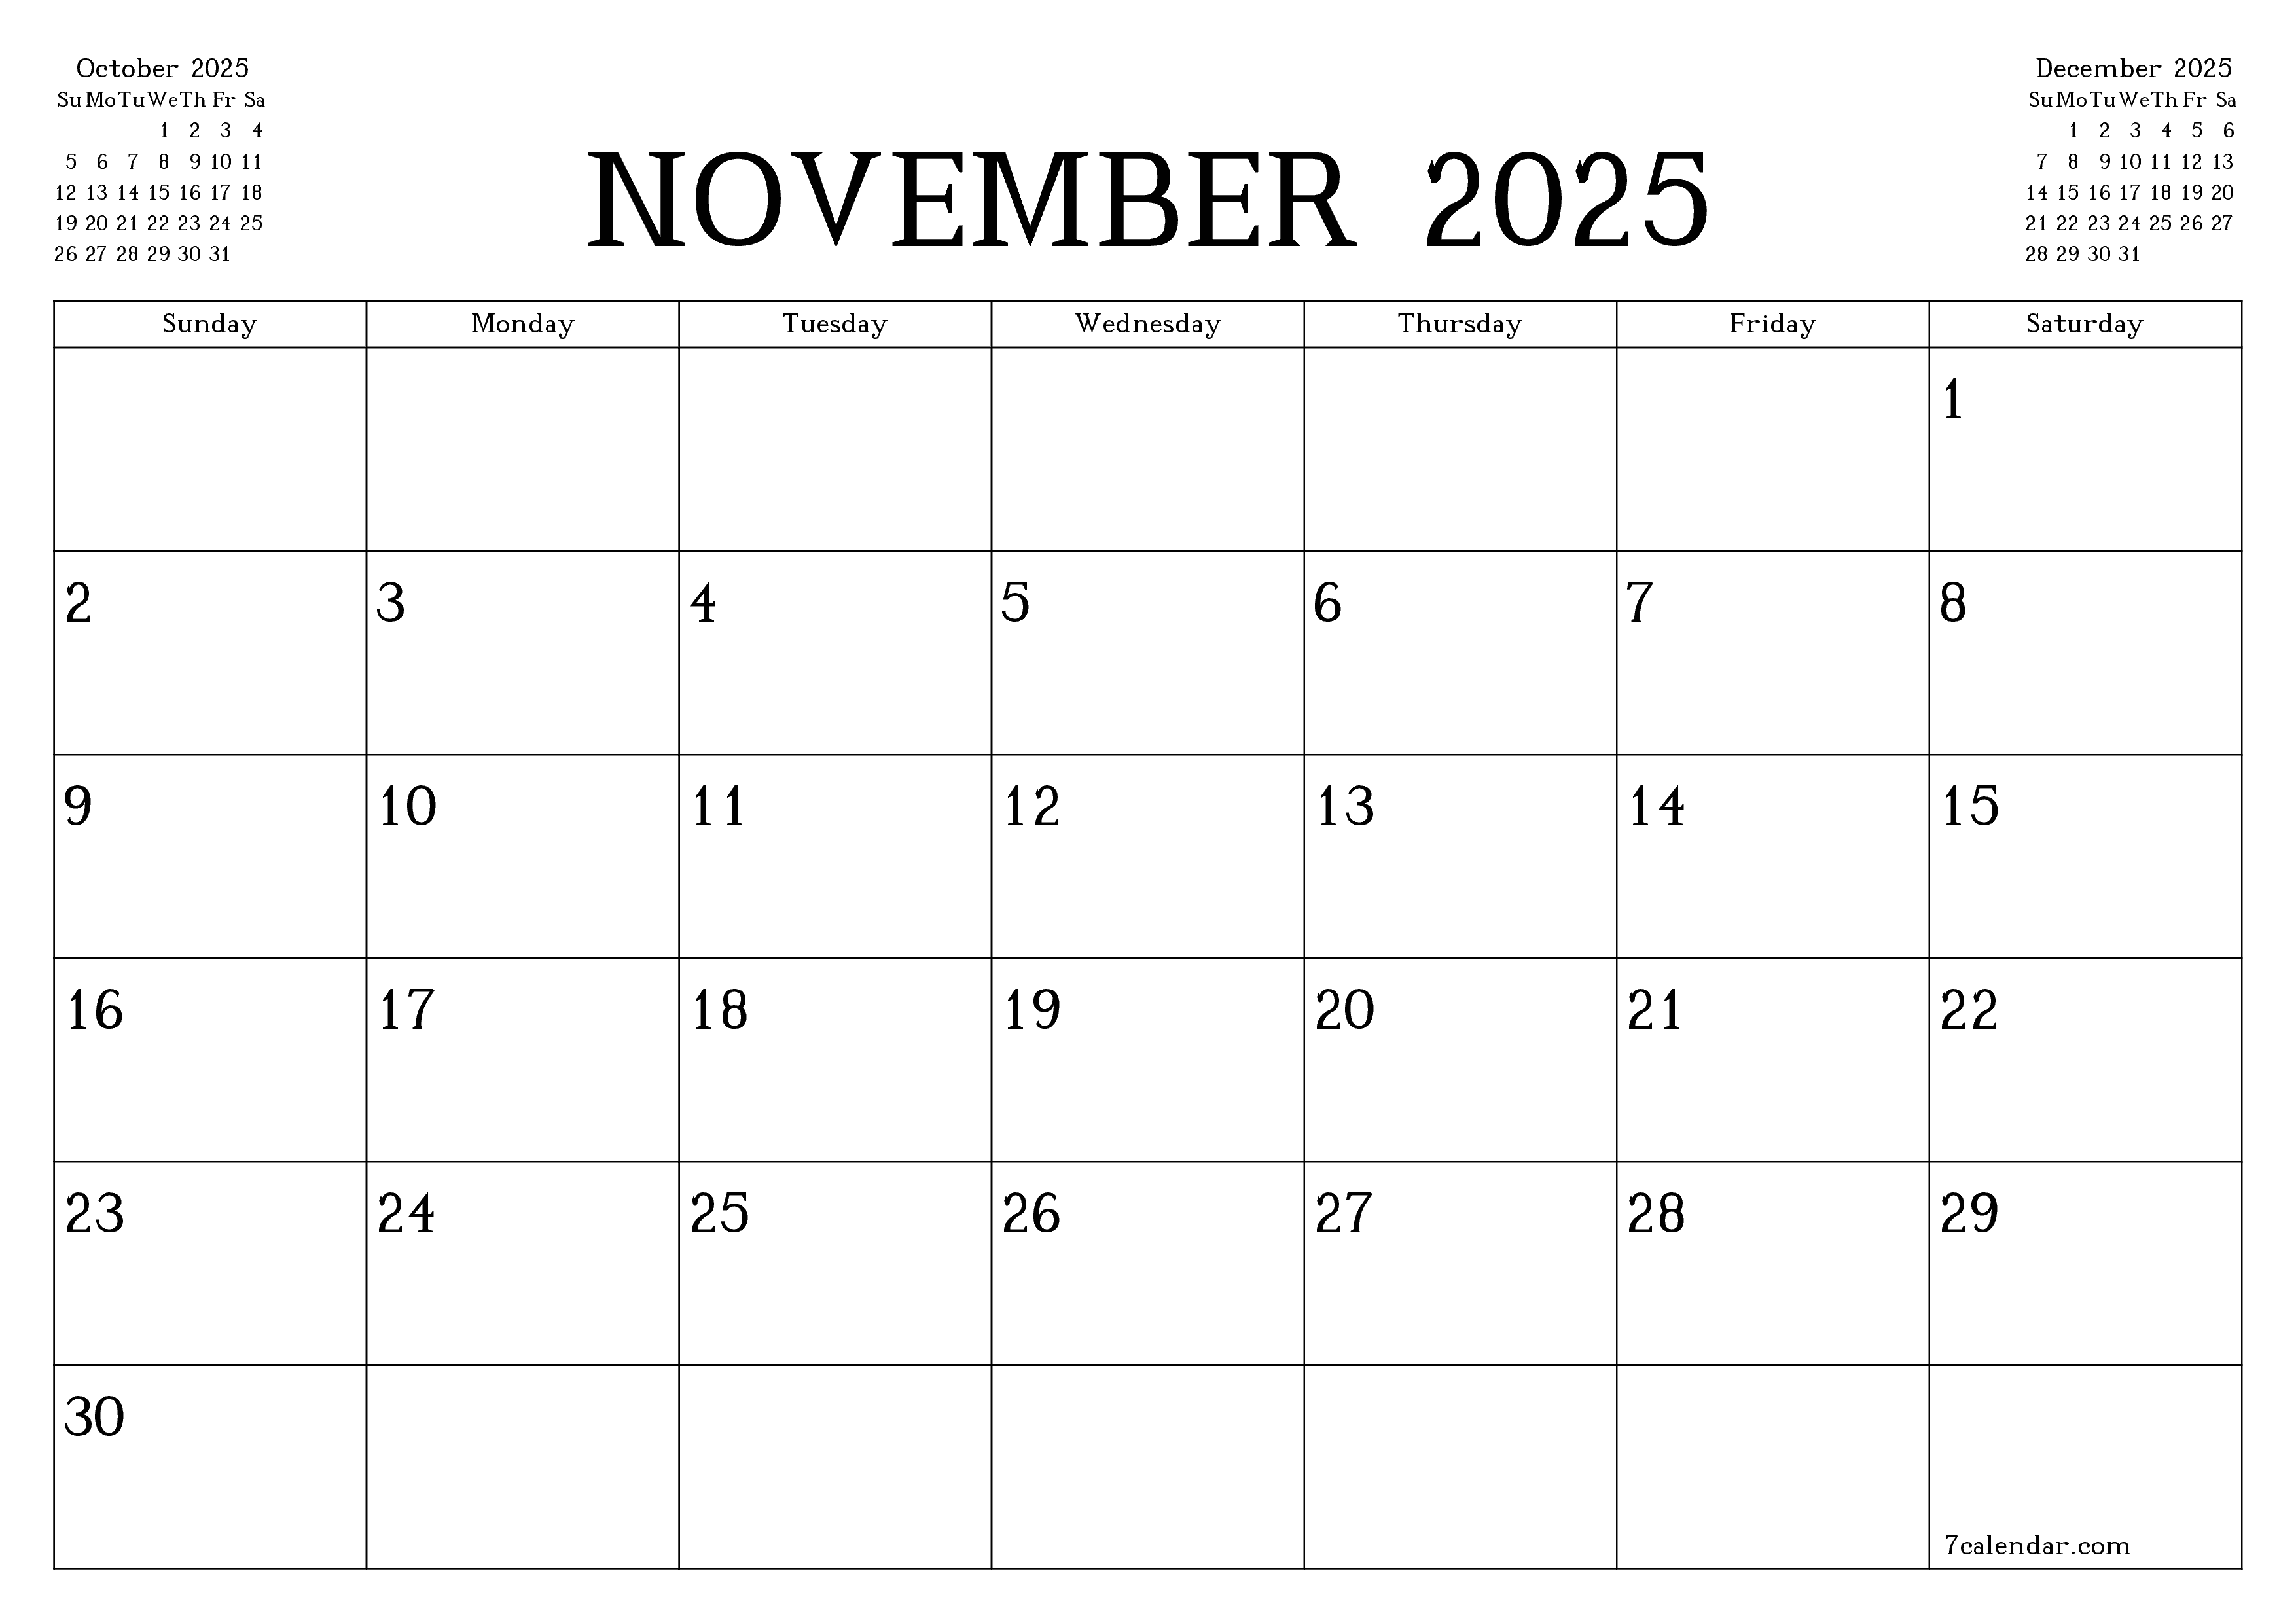 printable wall template free horizontal Monthly planner calendar November (Nov) 2025